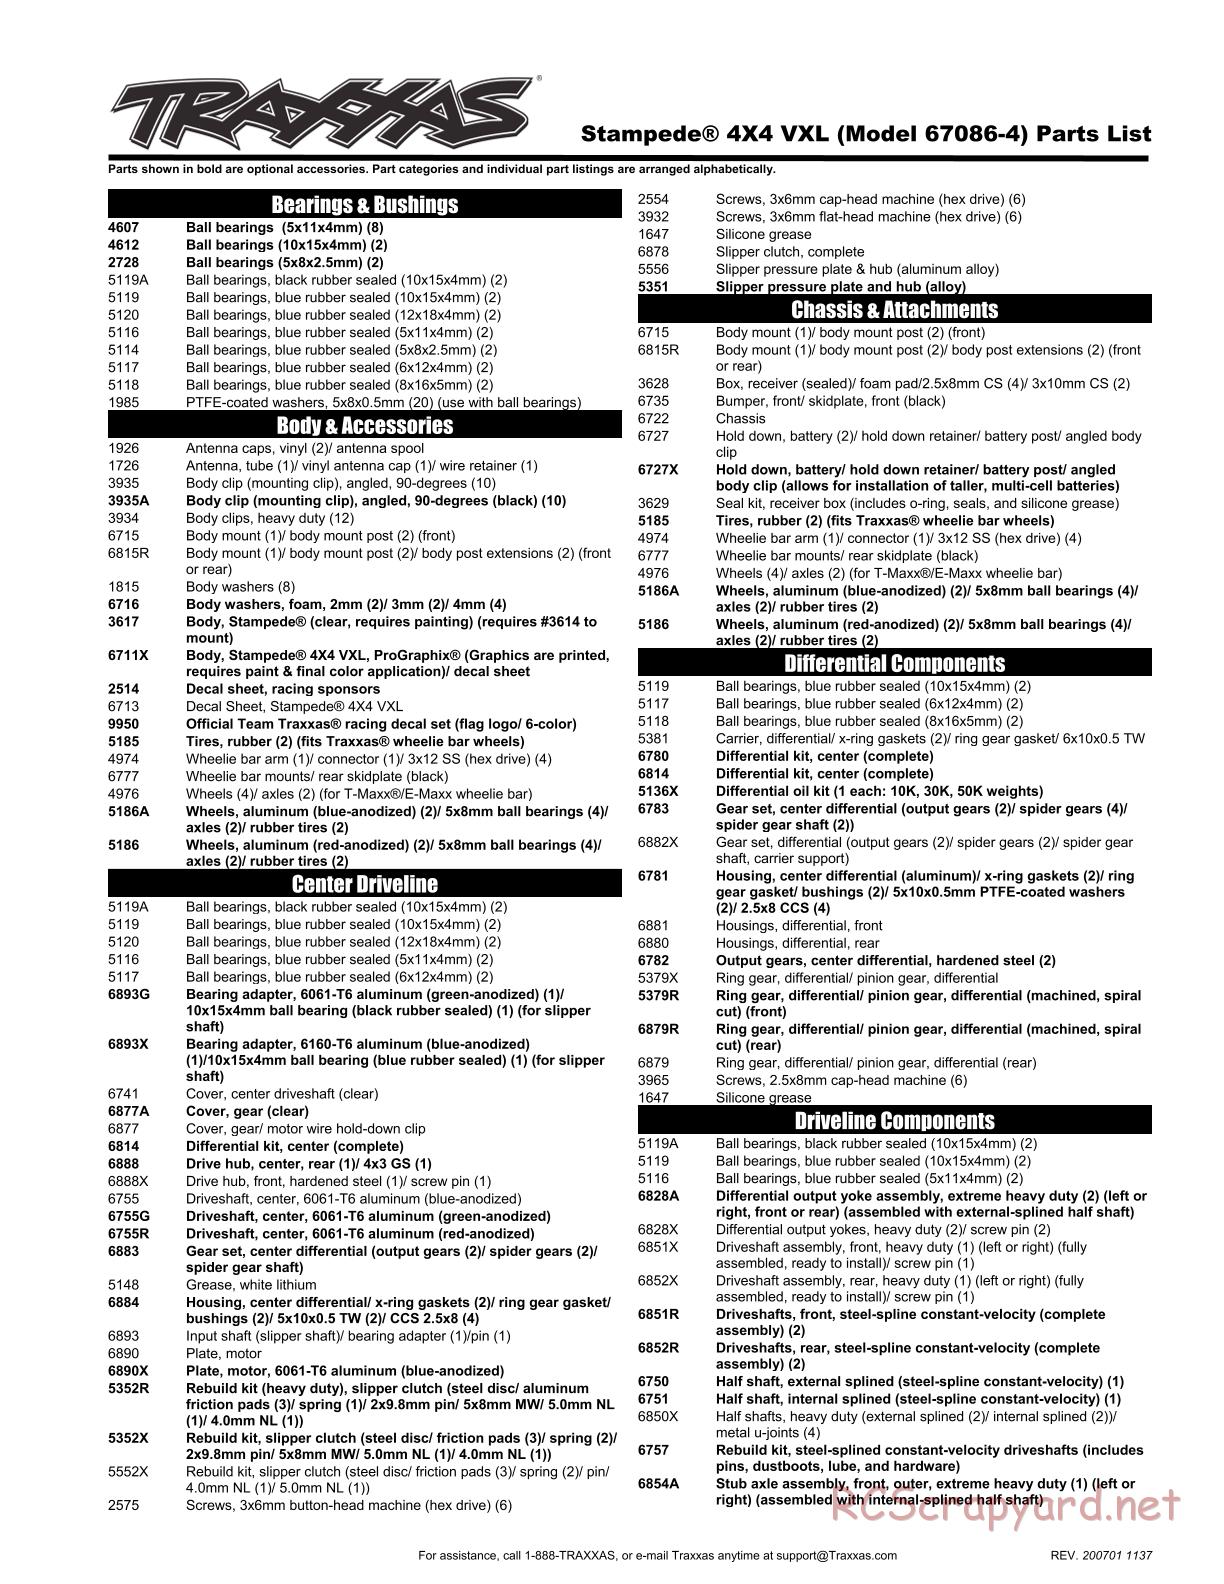 Traxxas - Stampede 4x4 VXL TSM - Parts List - Page 1